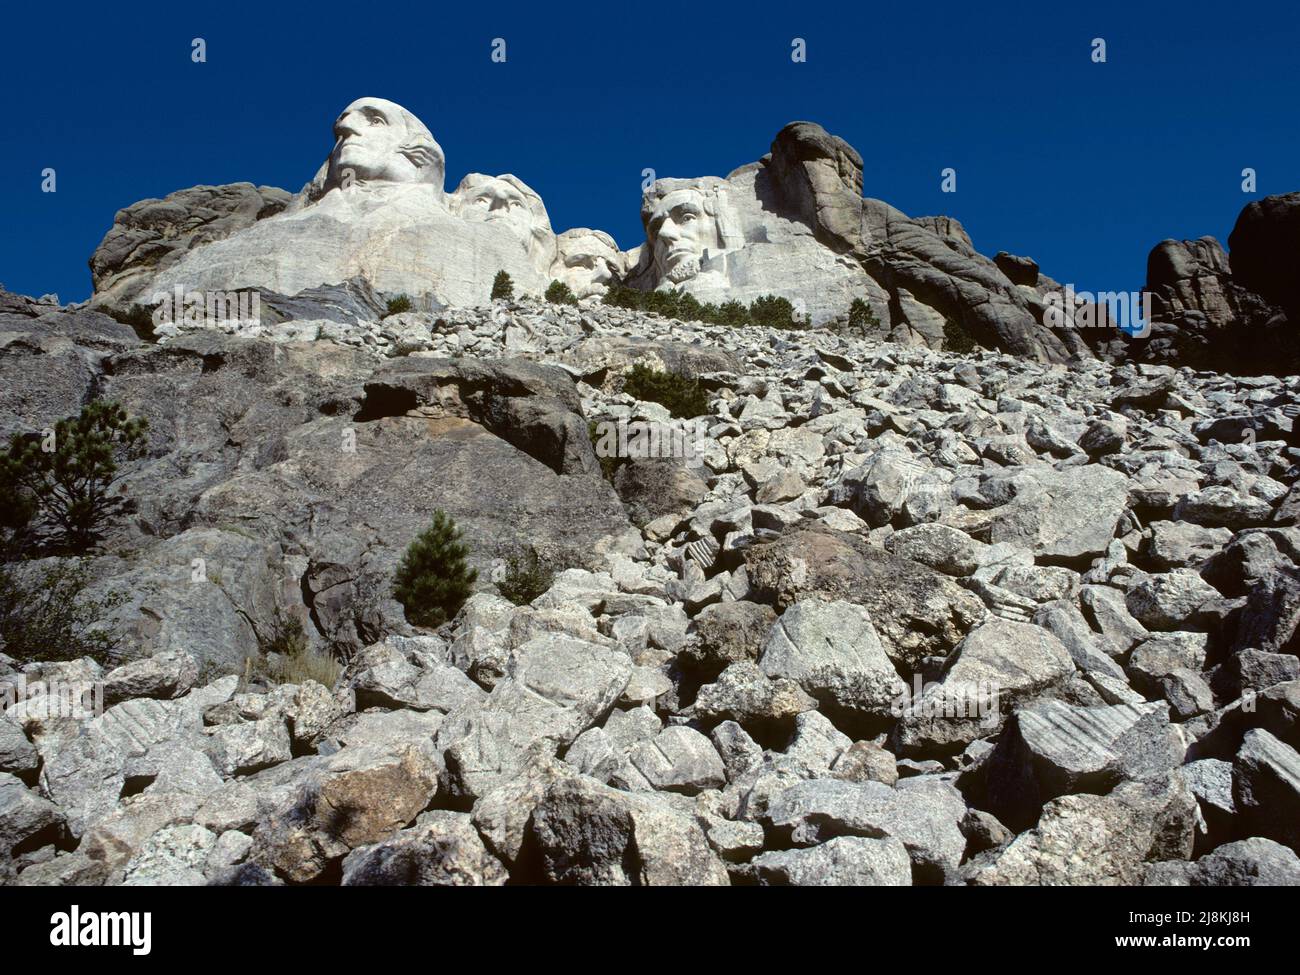 Mount Rushmore in South Dakota, USA Stock Photo